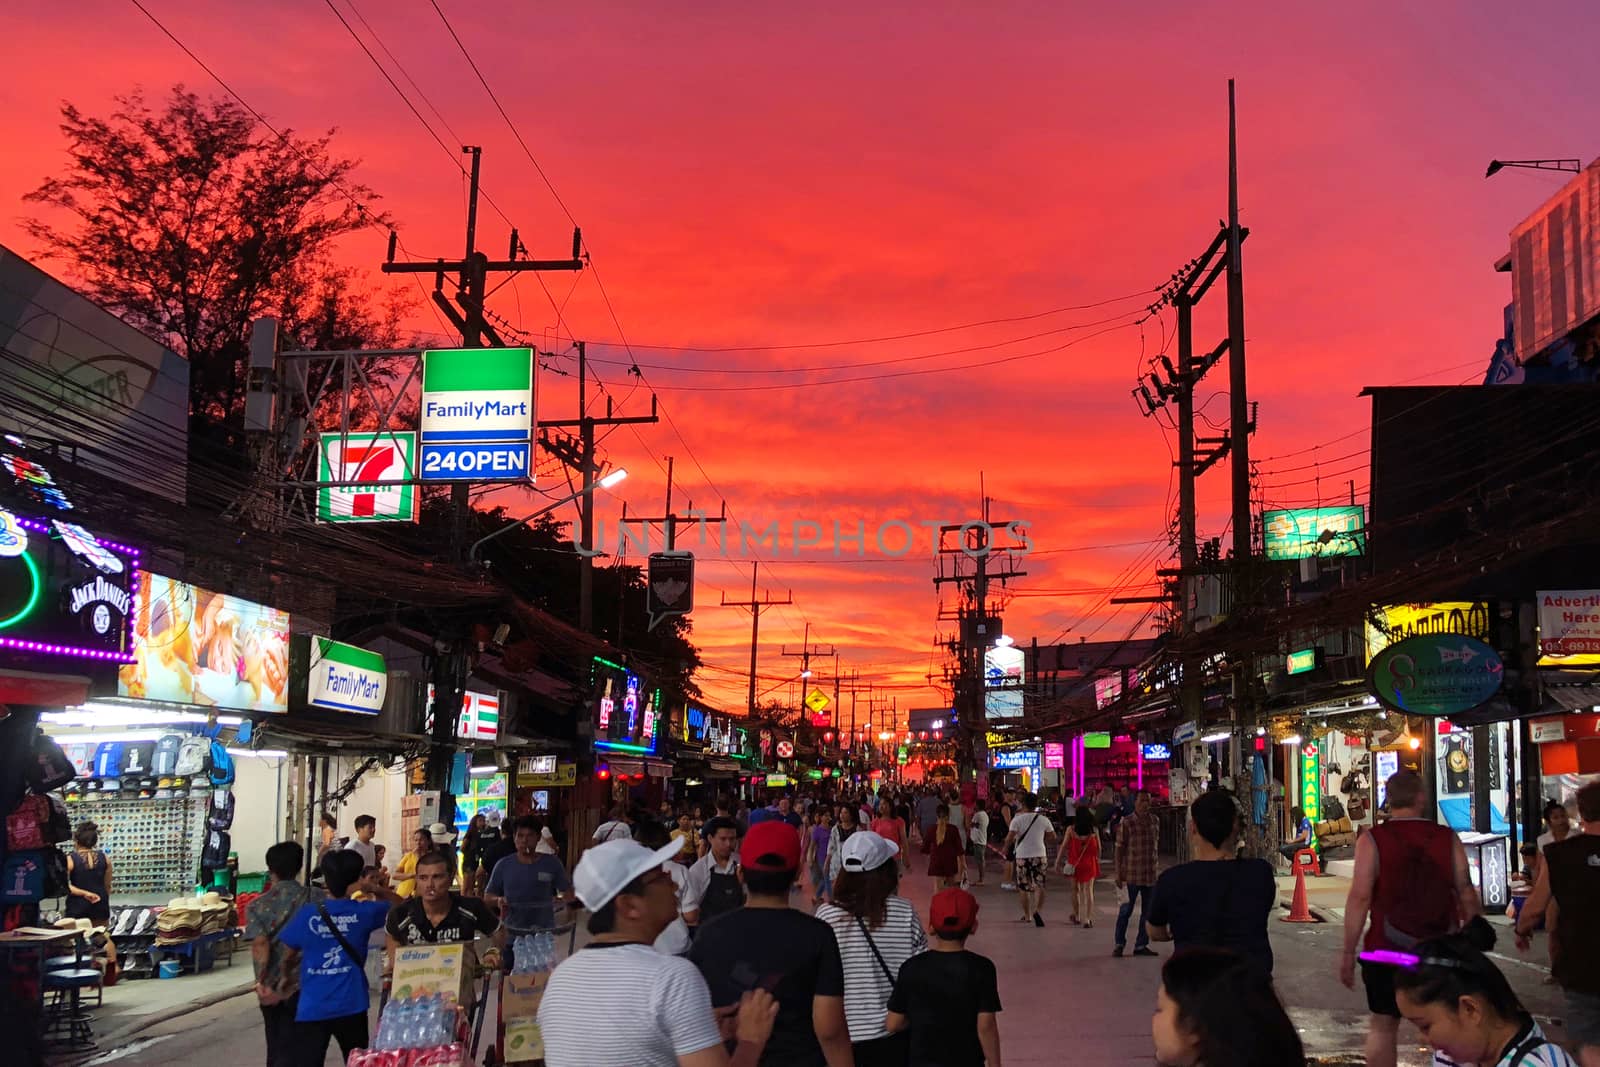 PHUKET, THAILAND JUNE, 2018: Tourists walking to see sunset view at street night market of Phuket, Thailand on June 16, 2018.